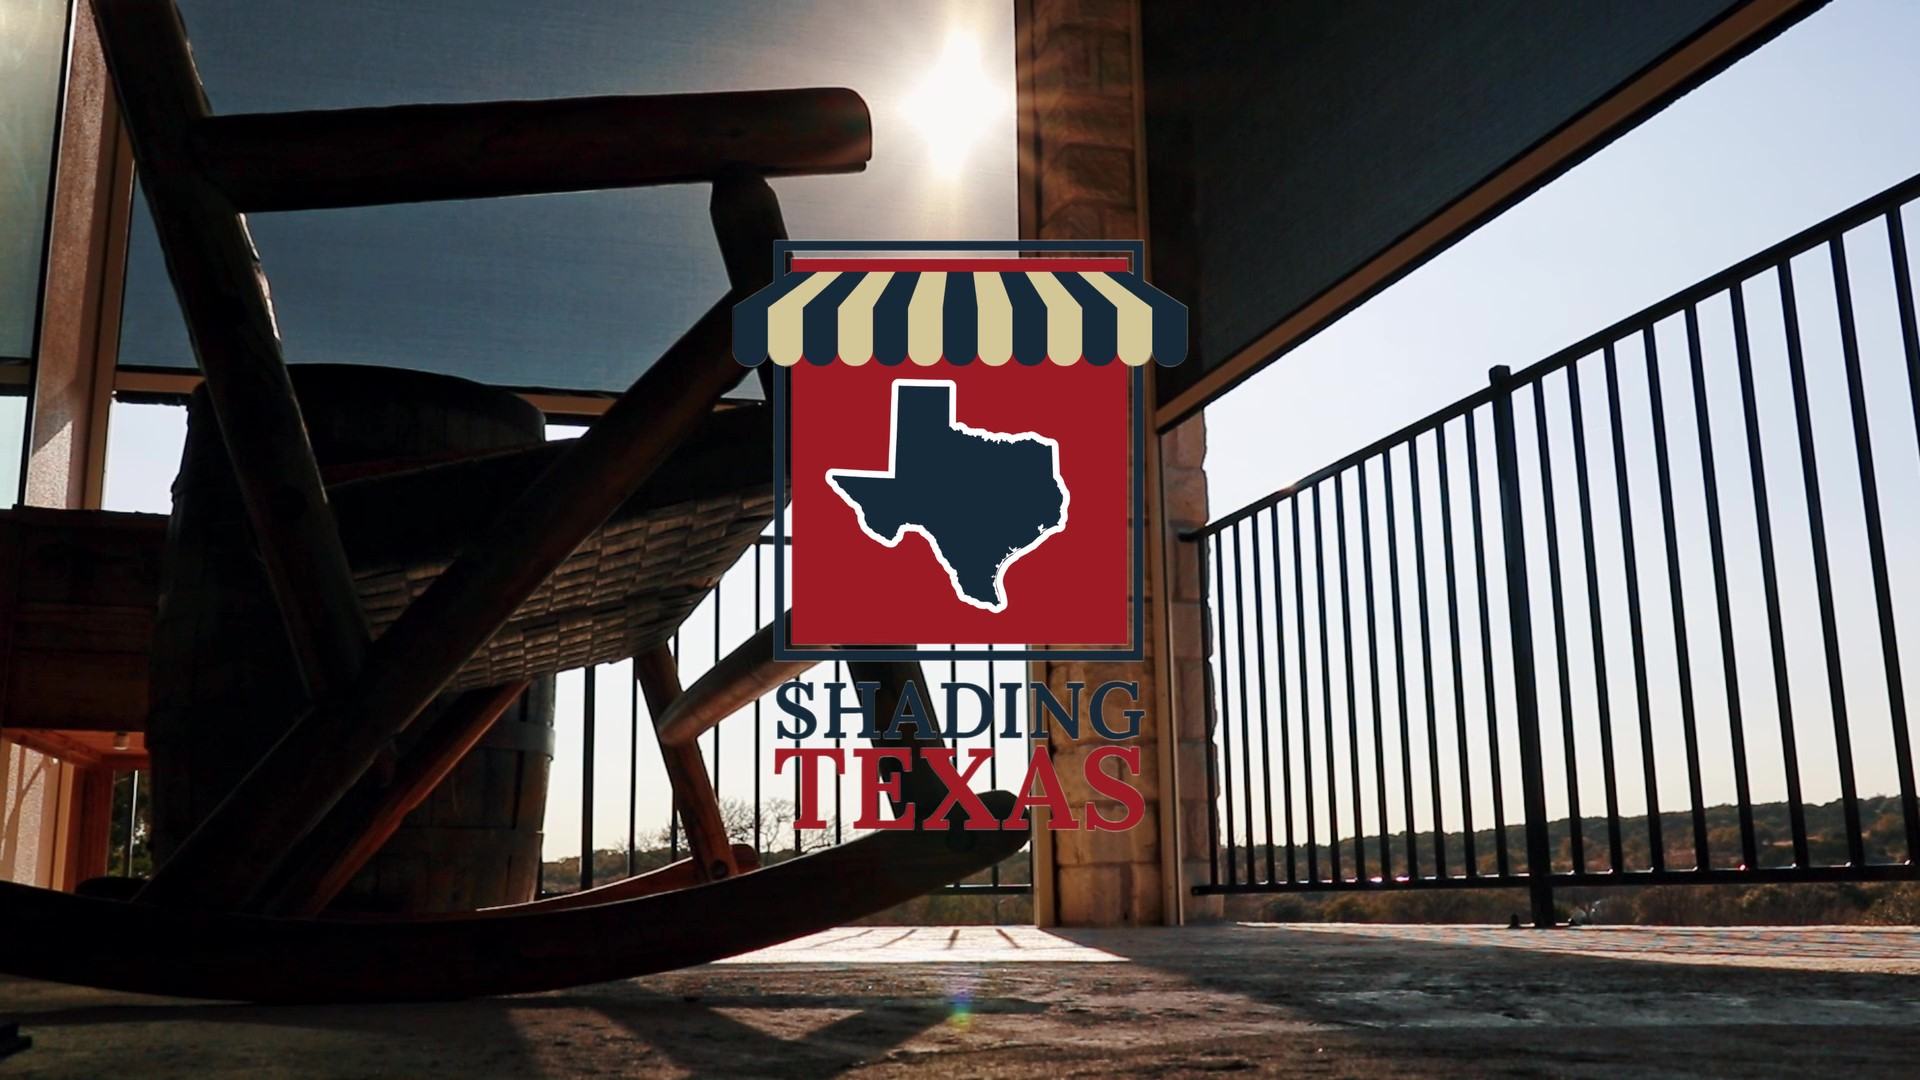 Shading Texas logo